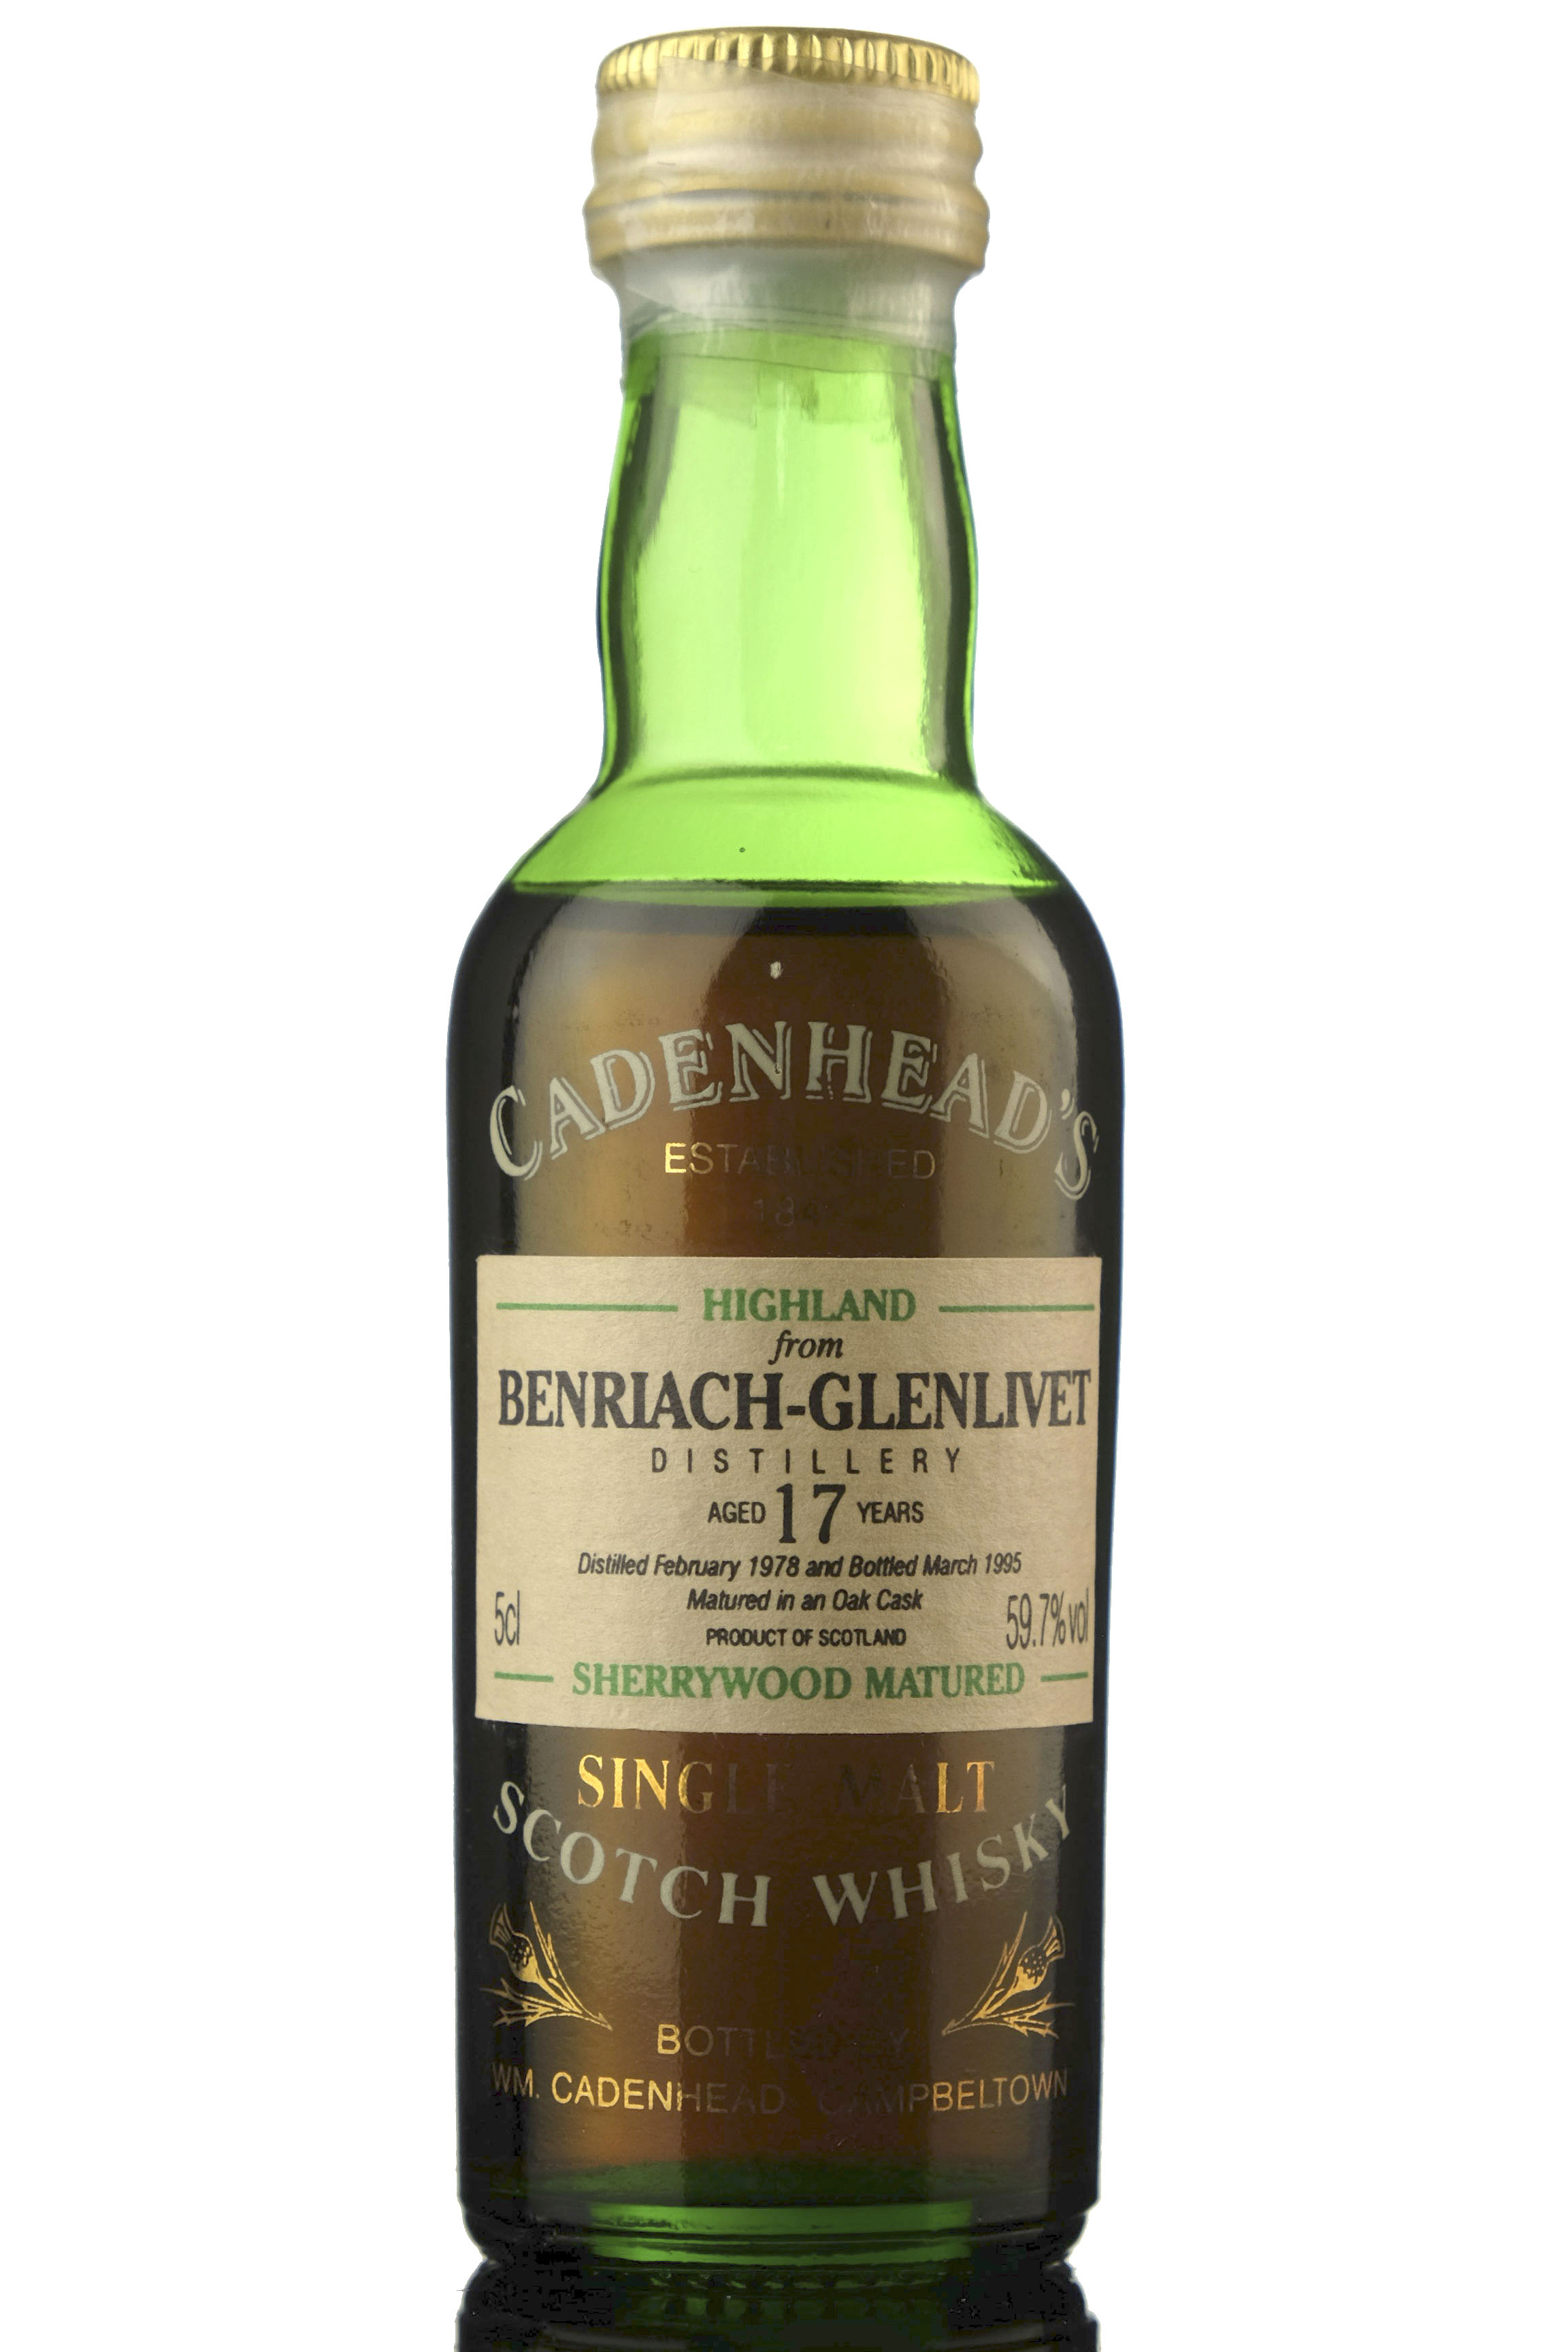 Benriach-Glenlivet 1978-1995 - 17 Year Old - Cadenheads Miniature